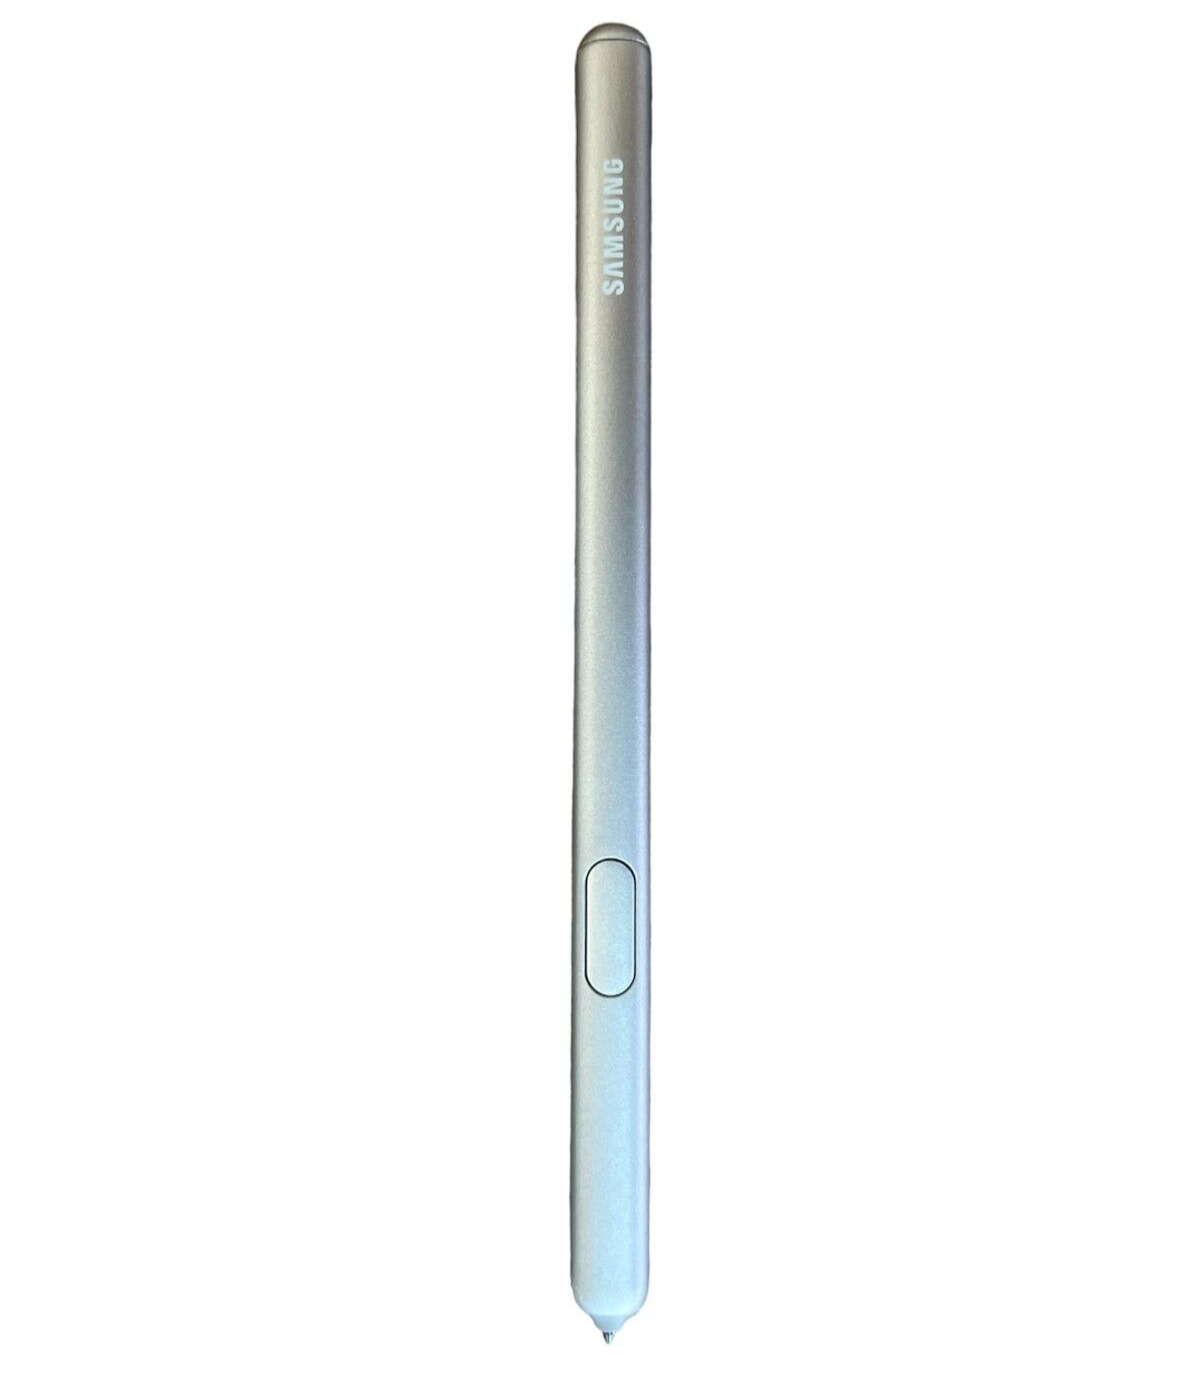 Original Genuine Samsung Galaxy Tab S6 T860 Official S Pen Stylus, Mountain Gray